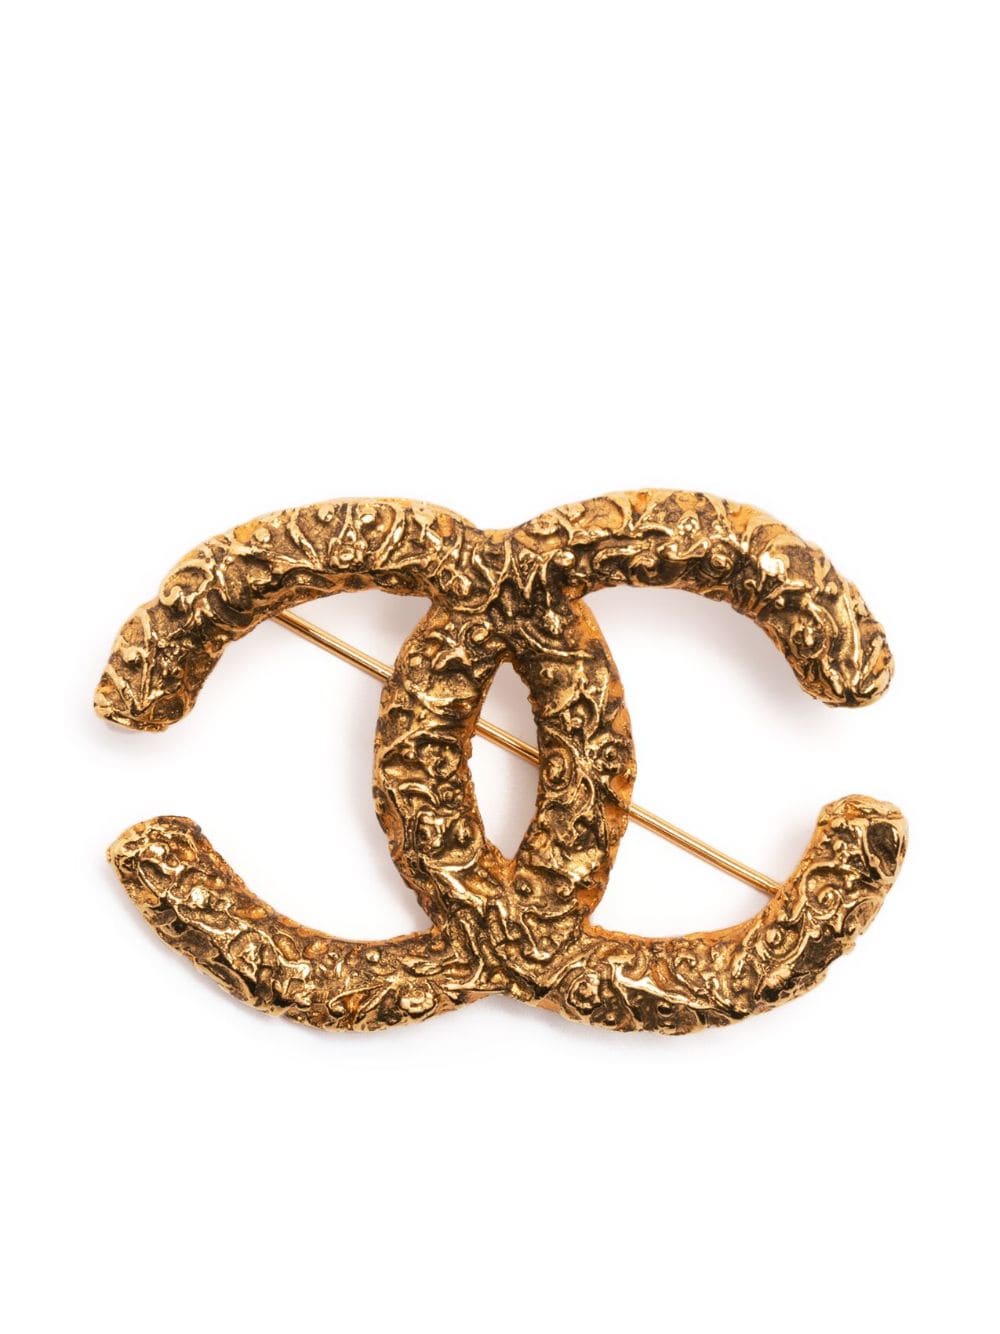 CHANEL CC Logo Vintage Brooch Gold Tone Pin Auth wBox 0525  eBay